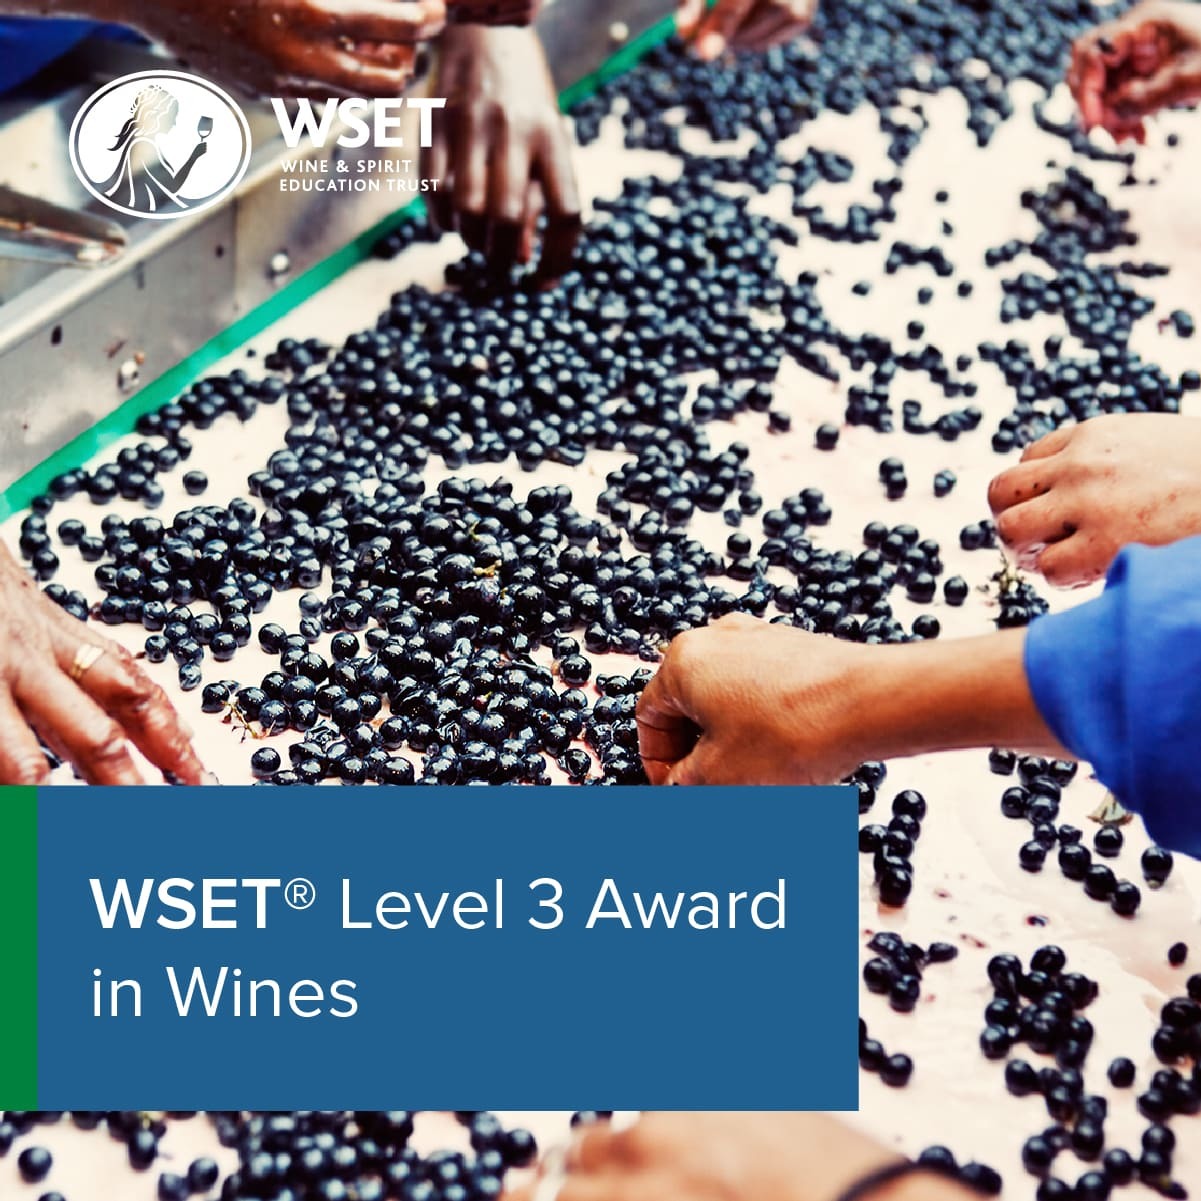 WSET Level 3 Award in Wines (including exam) - February 2023 